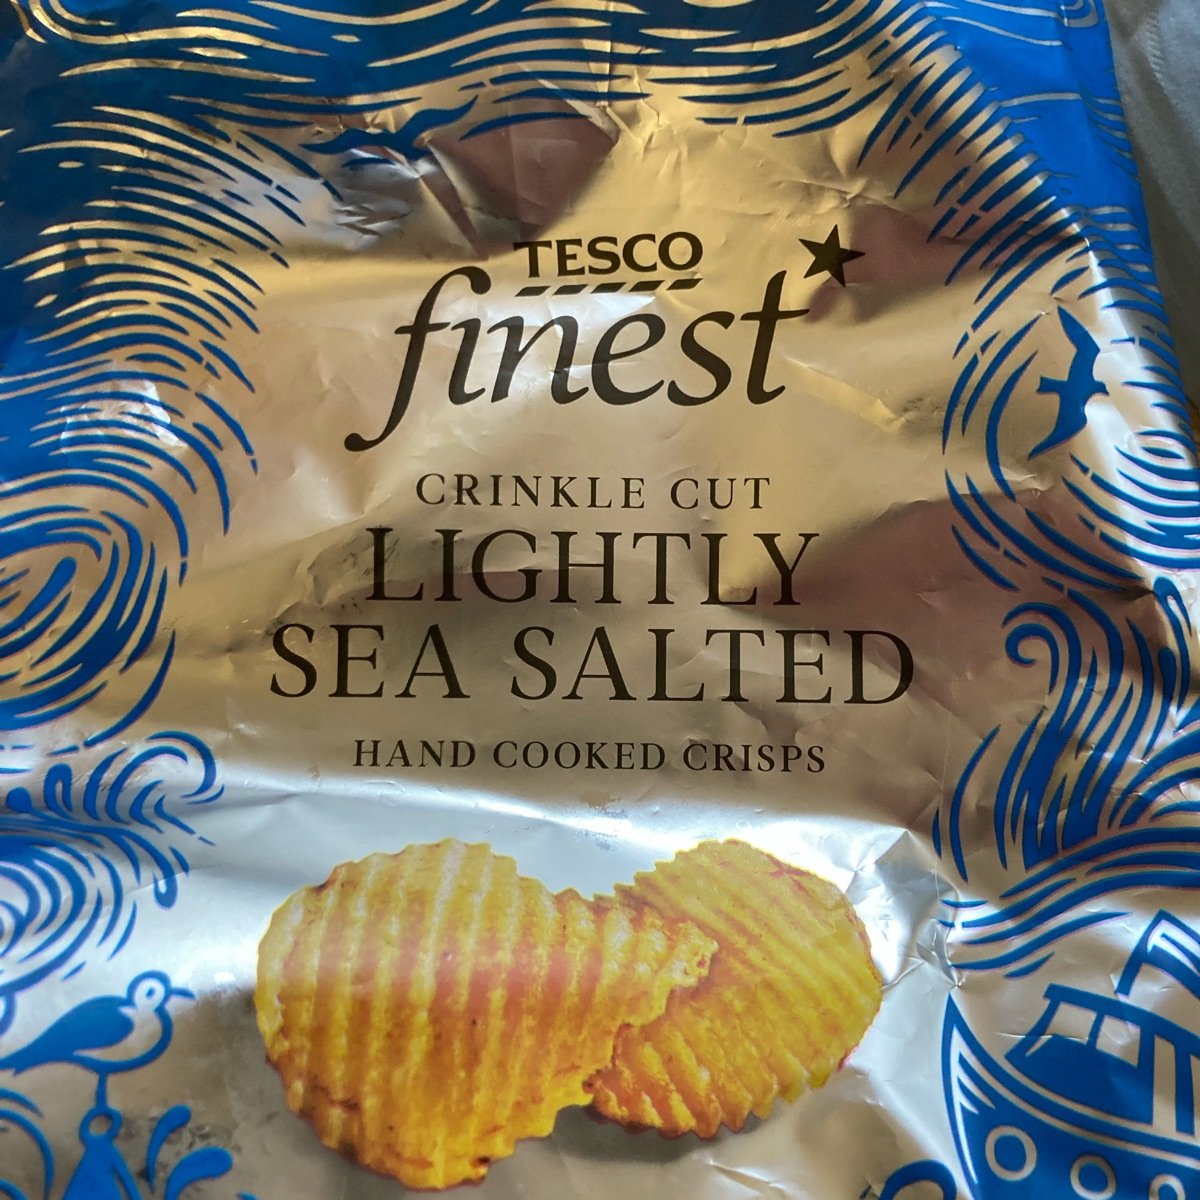 Tesco Finest Crinkle Cut Lightly Sea Salted Crisps Reviews | abillion